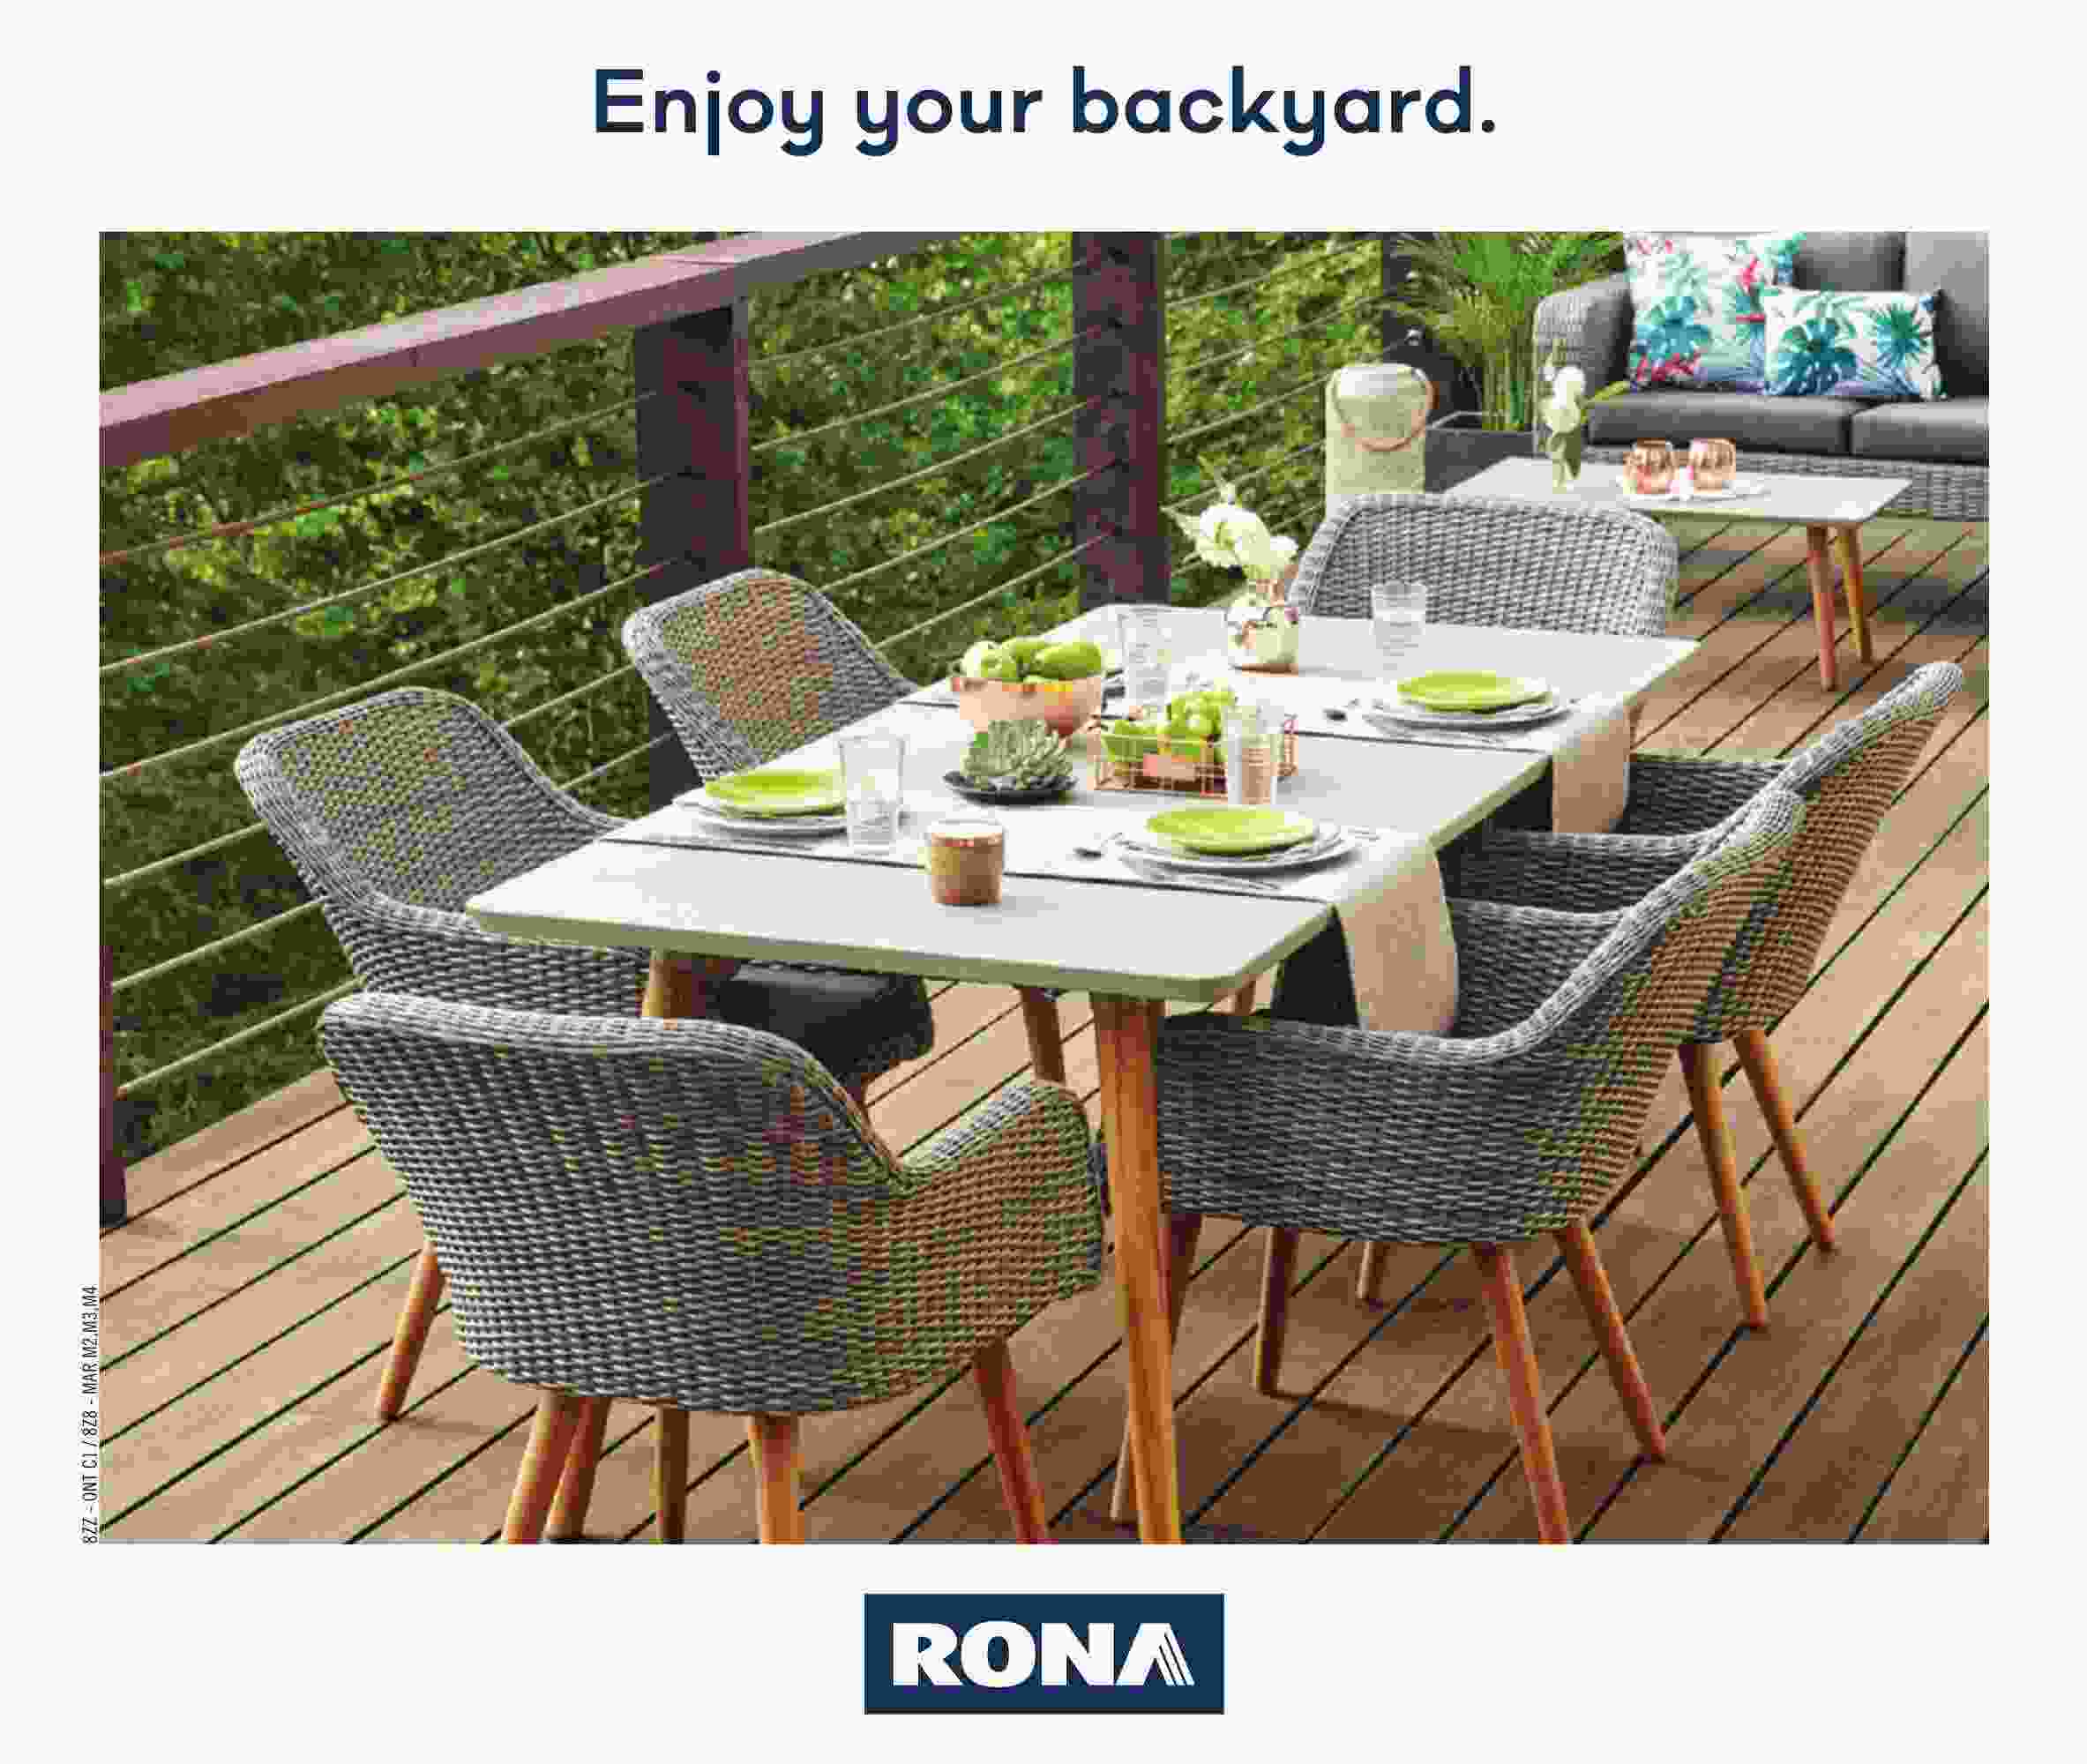 Rona Flyer On Enjoy Your Backyard March 22 April 25 2018